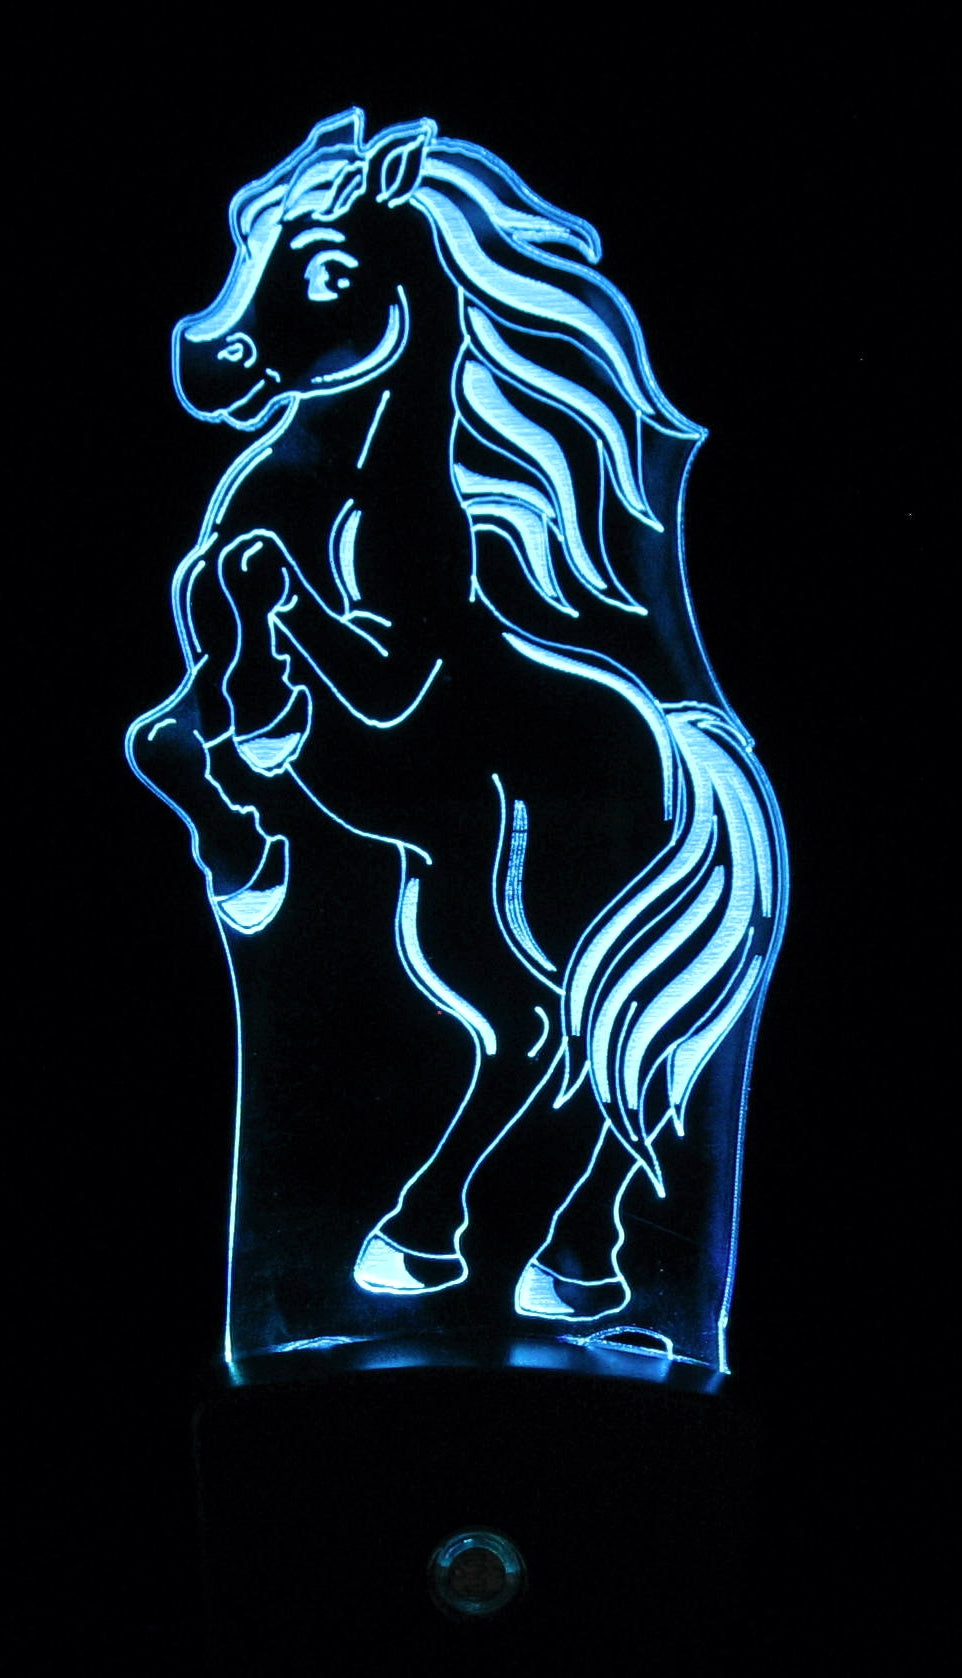 Nightlight Mini RGB LED Lamp Base with Artwork